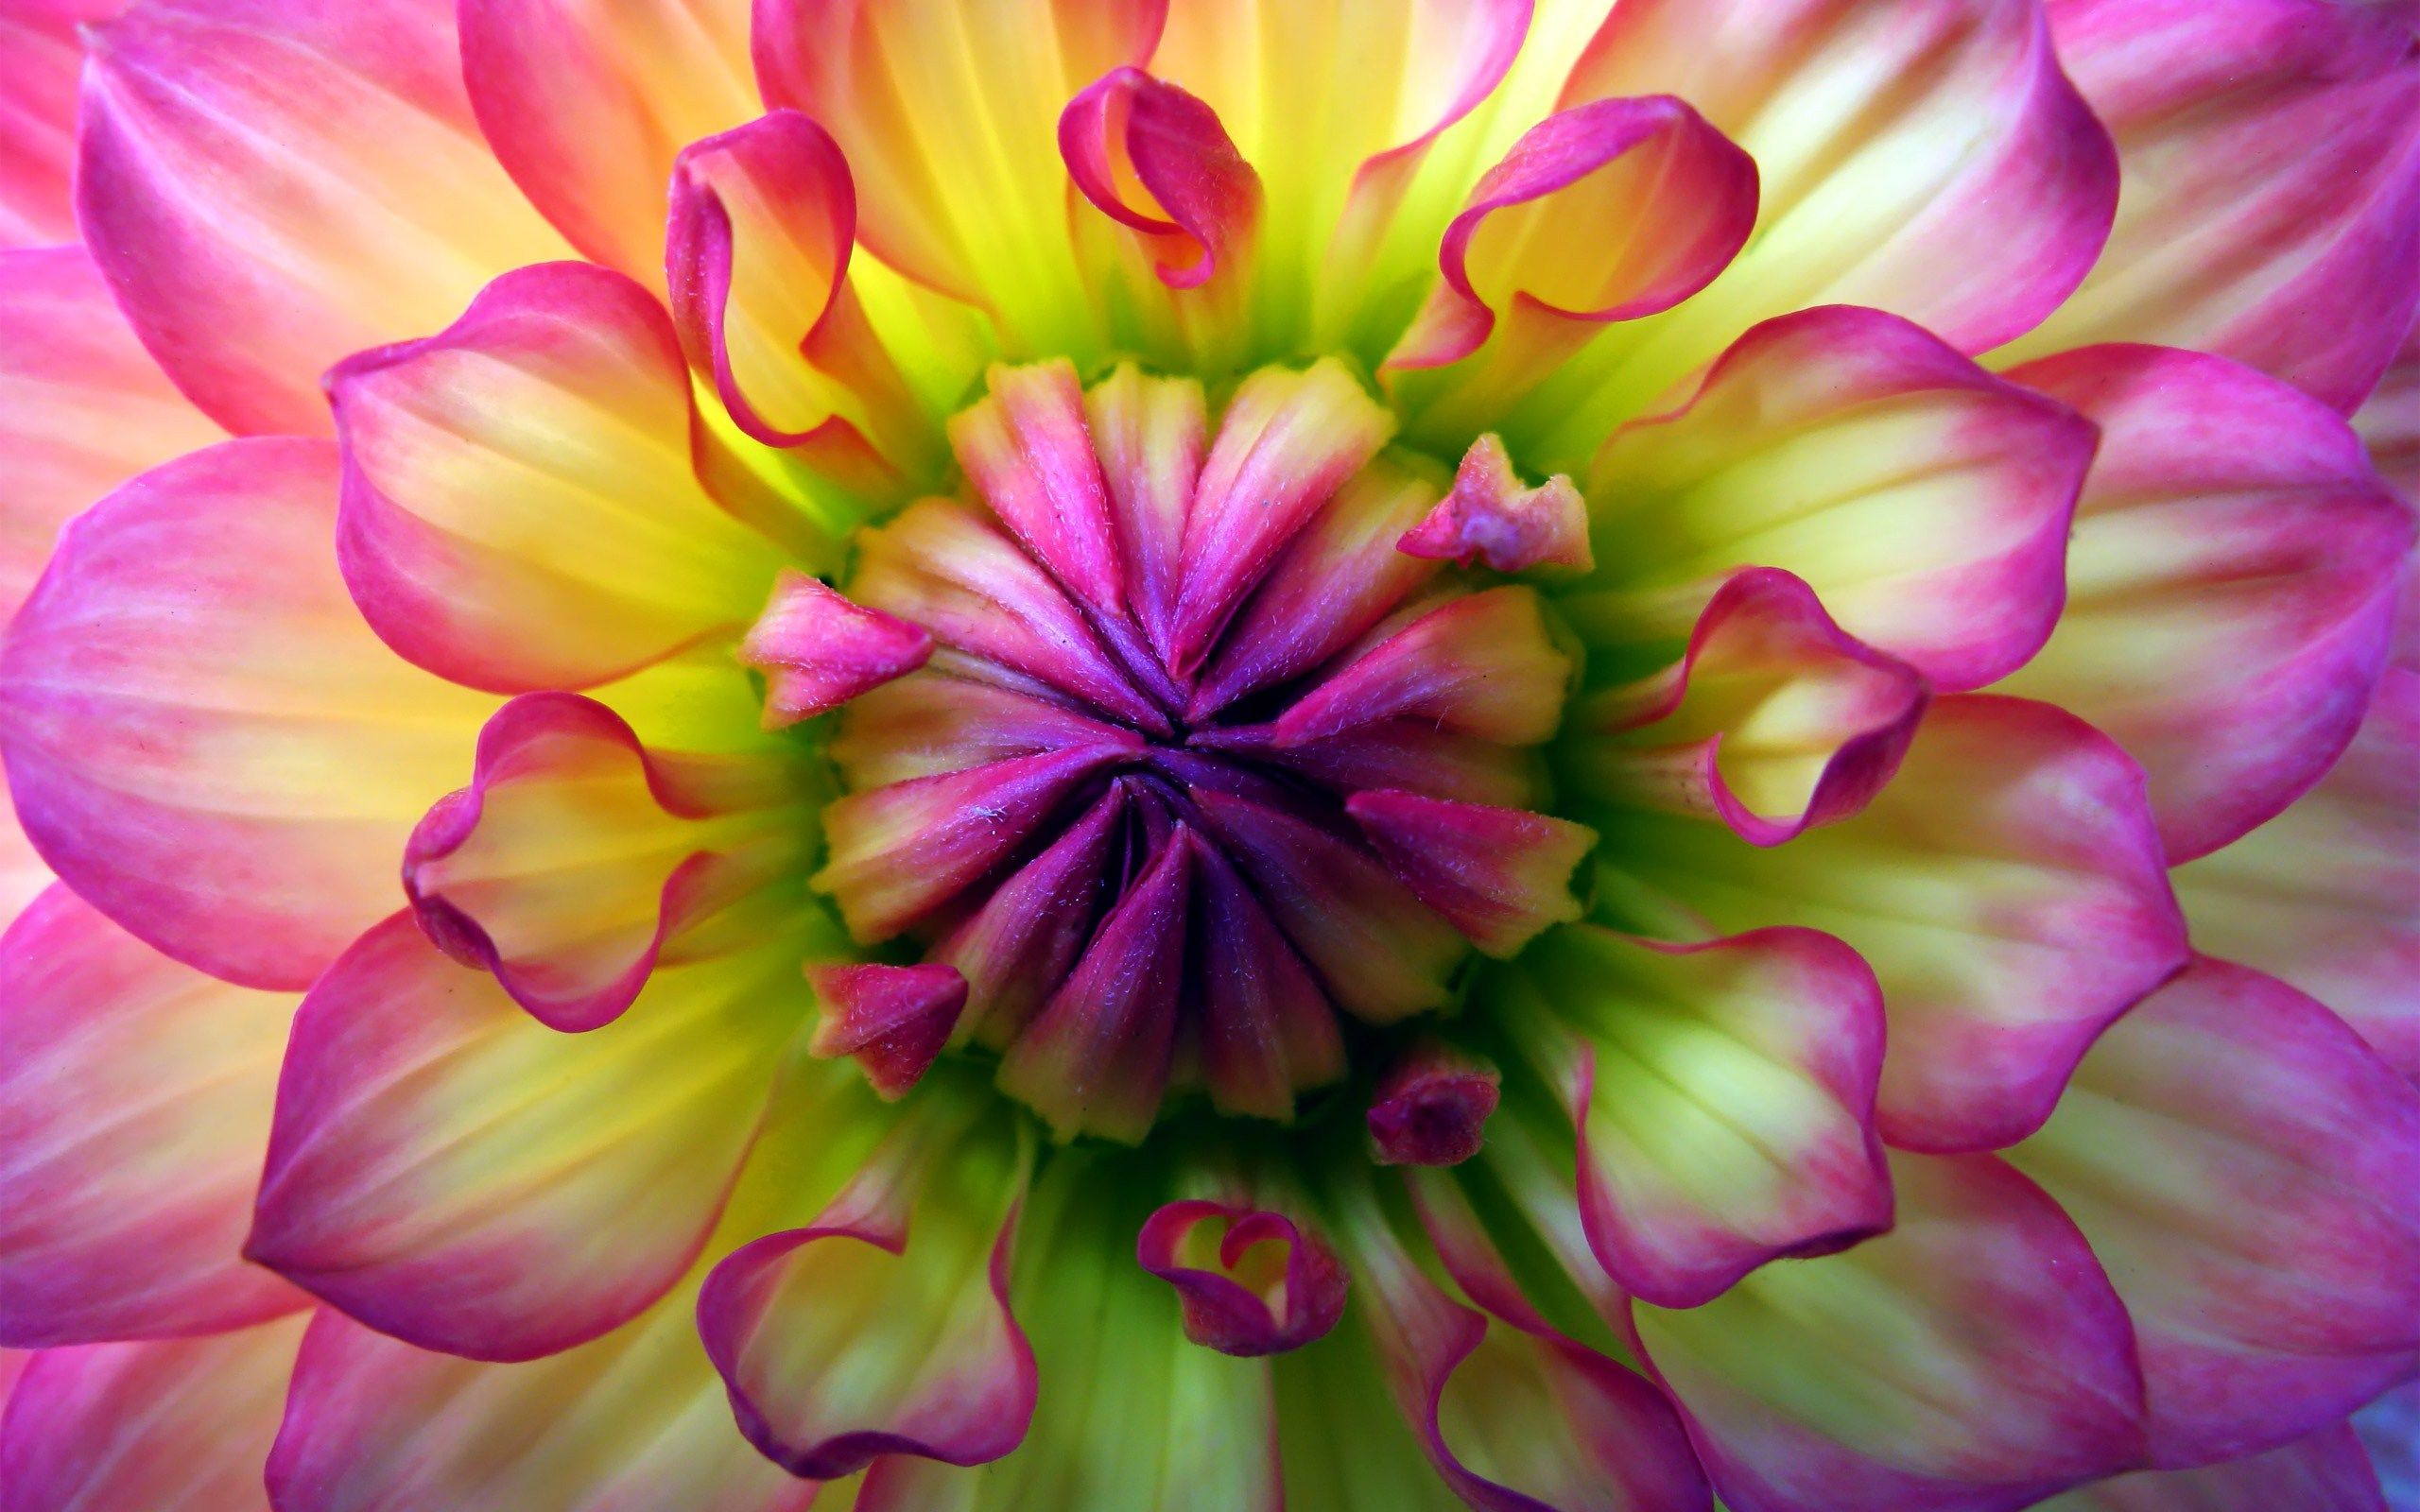 Image result for dahlia macro photo | reference | Pinterest | Dahlia ...